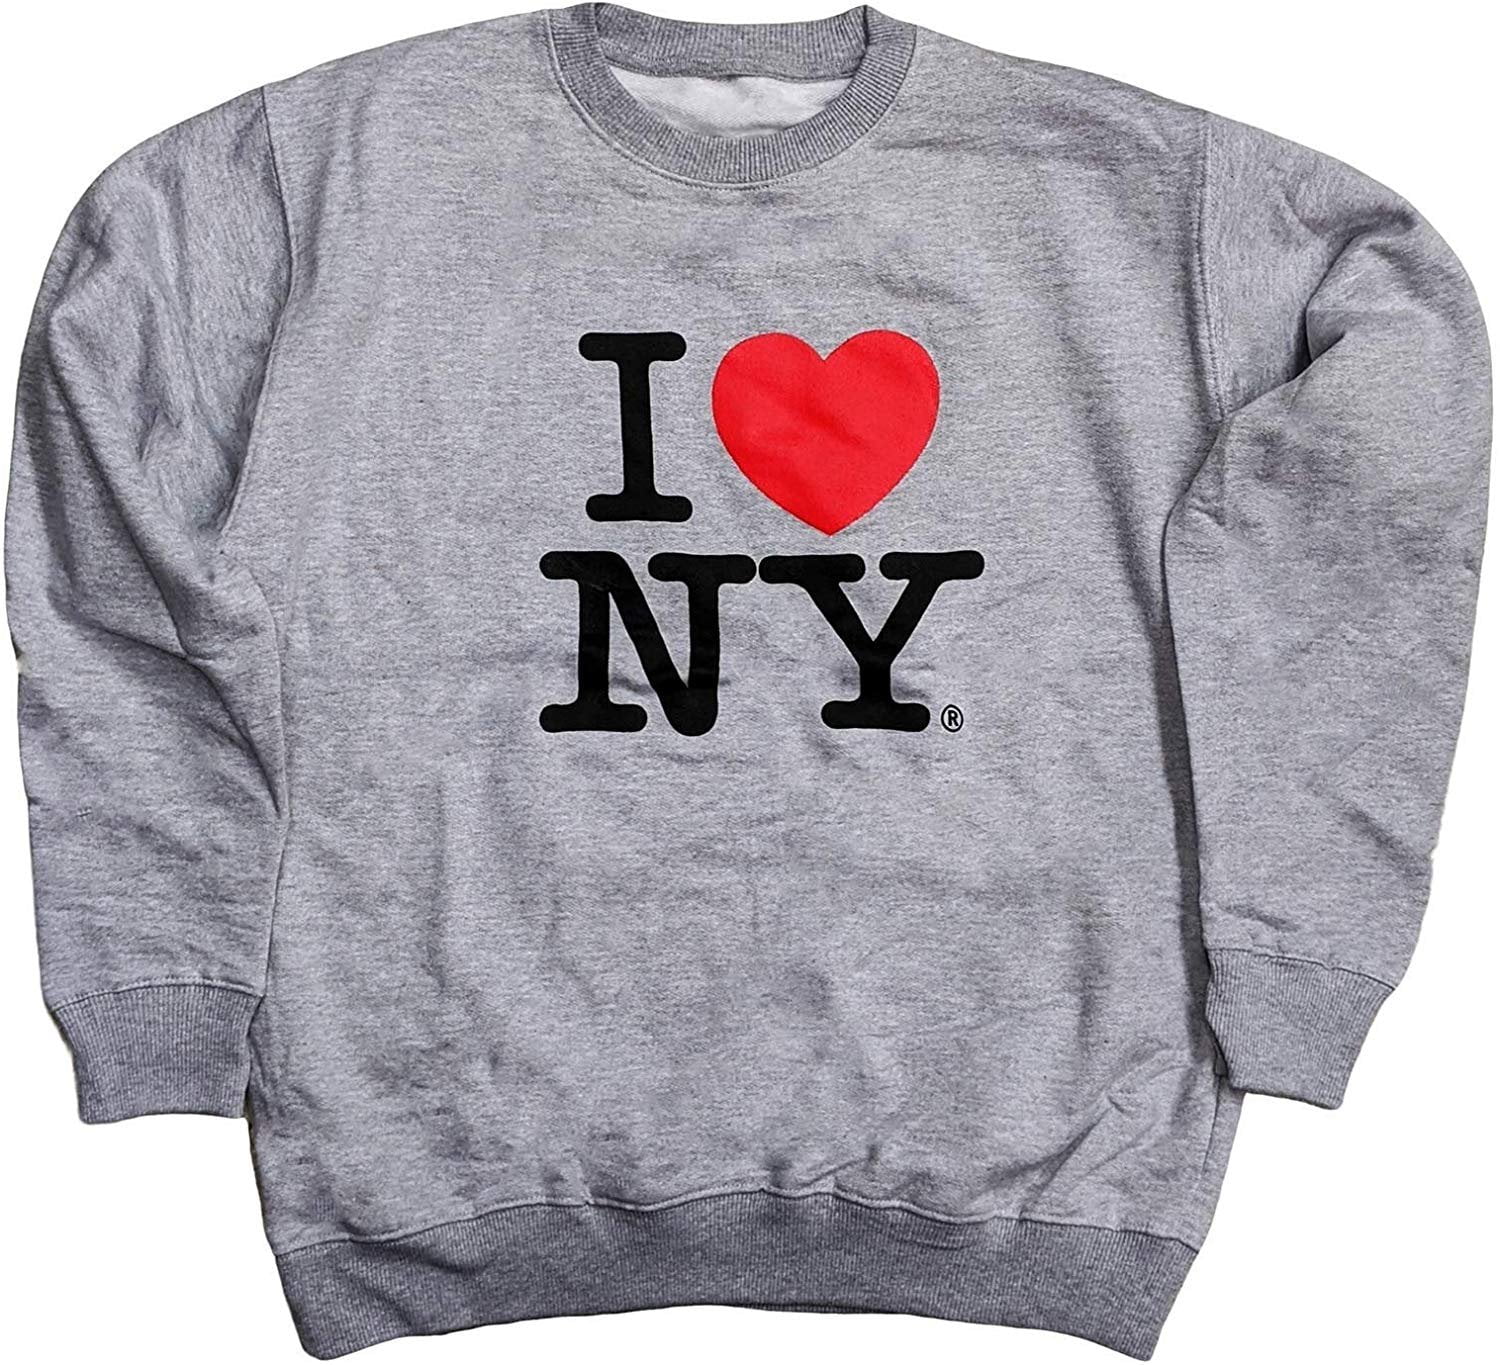 Grey Adult Small I Love NY Crewneck Sweatshirt 